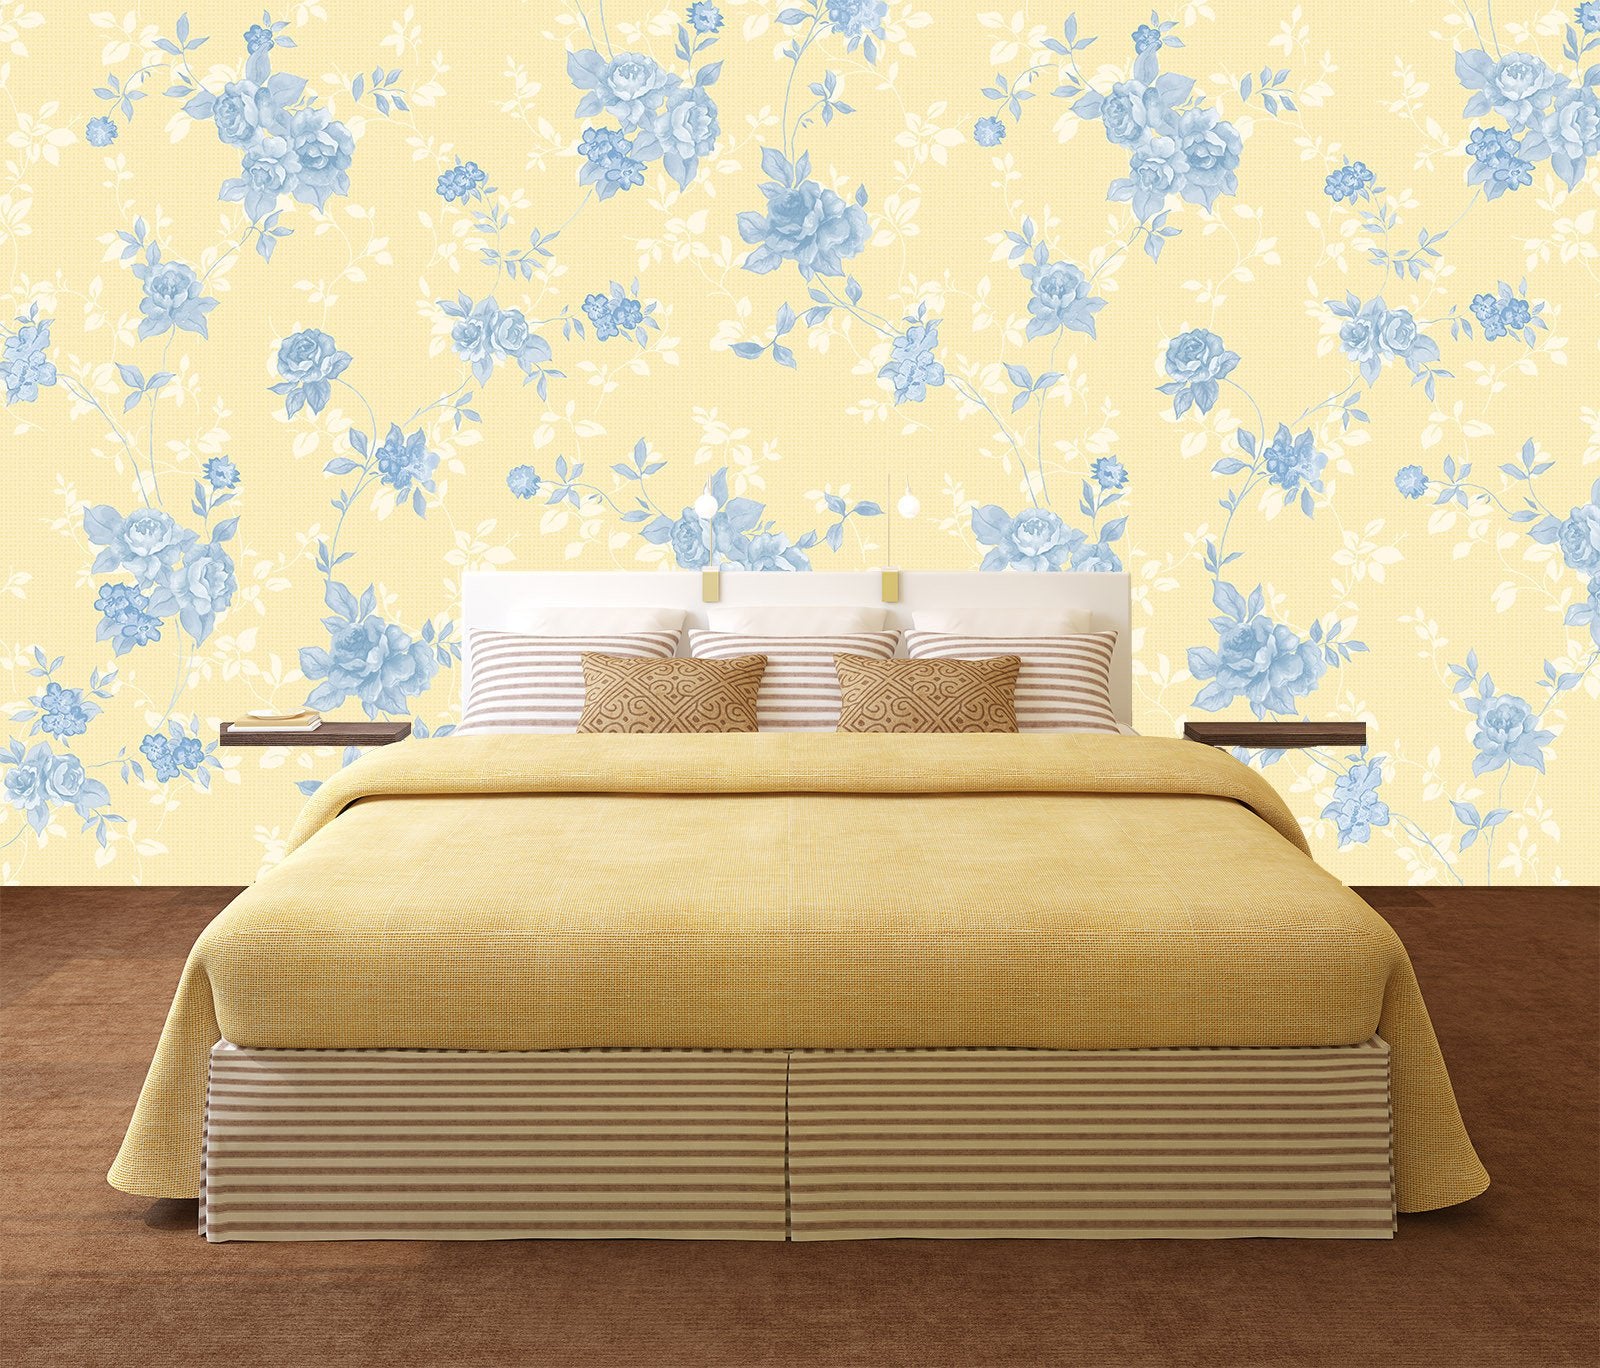 3D Blue Flowers 301 Wallpaper AJ Wallpaper 